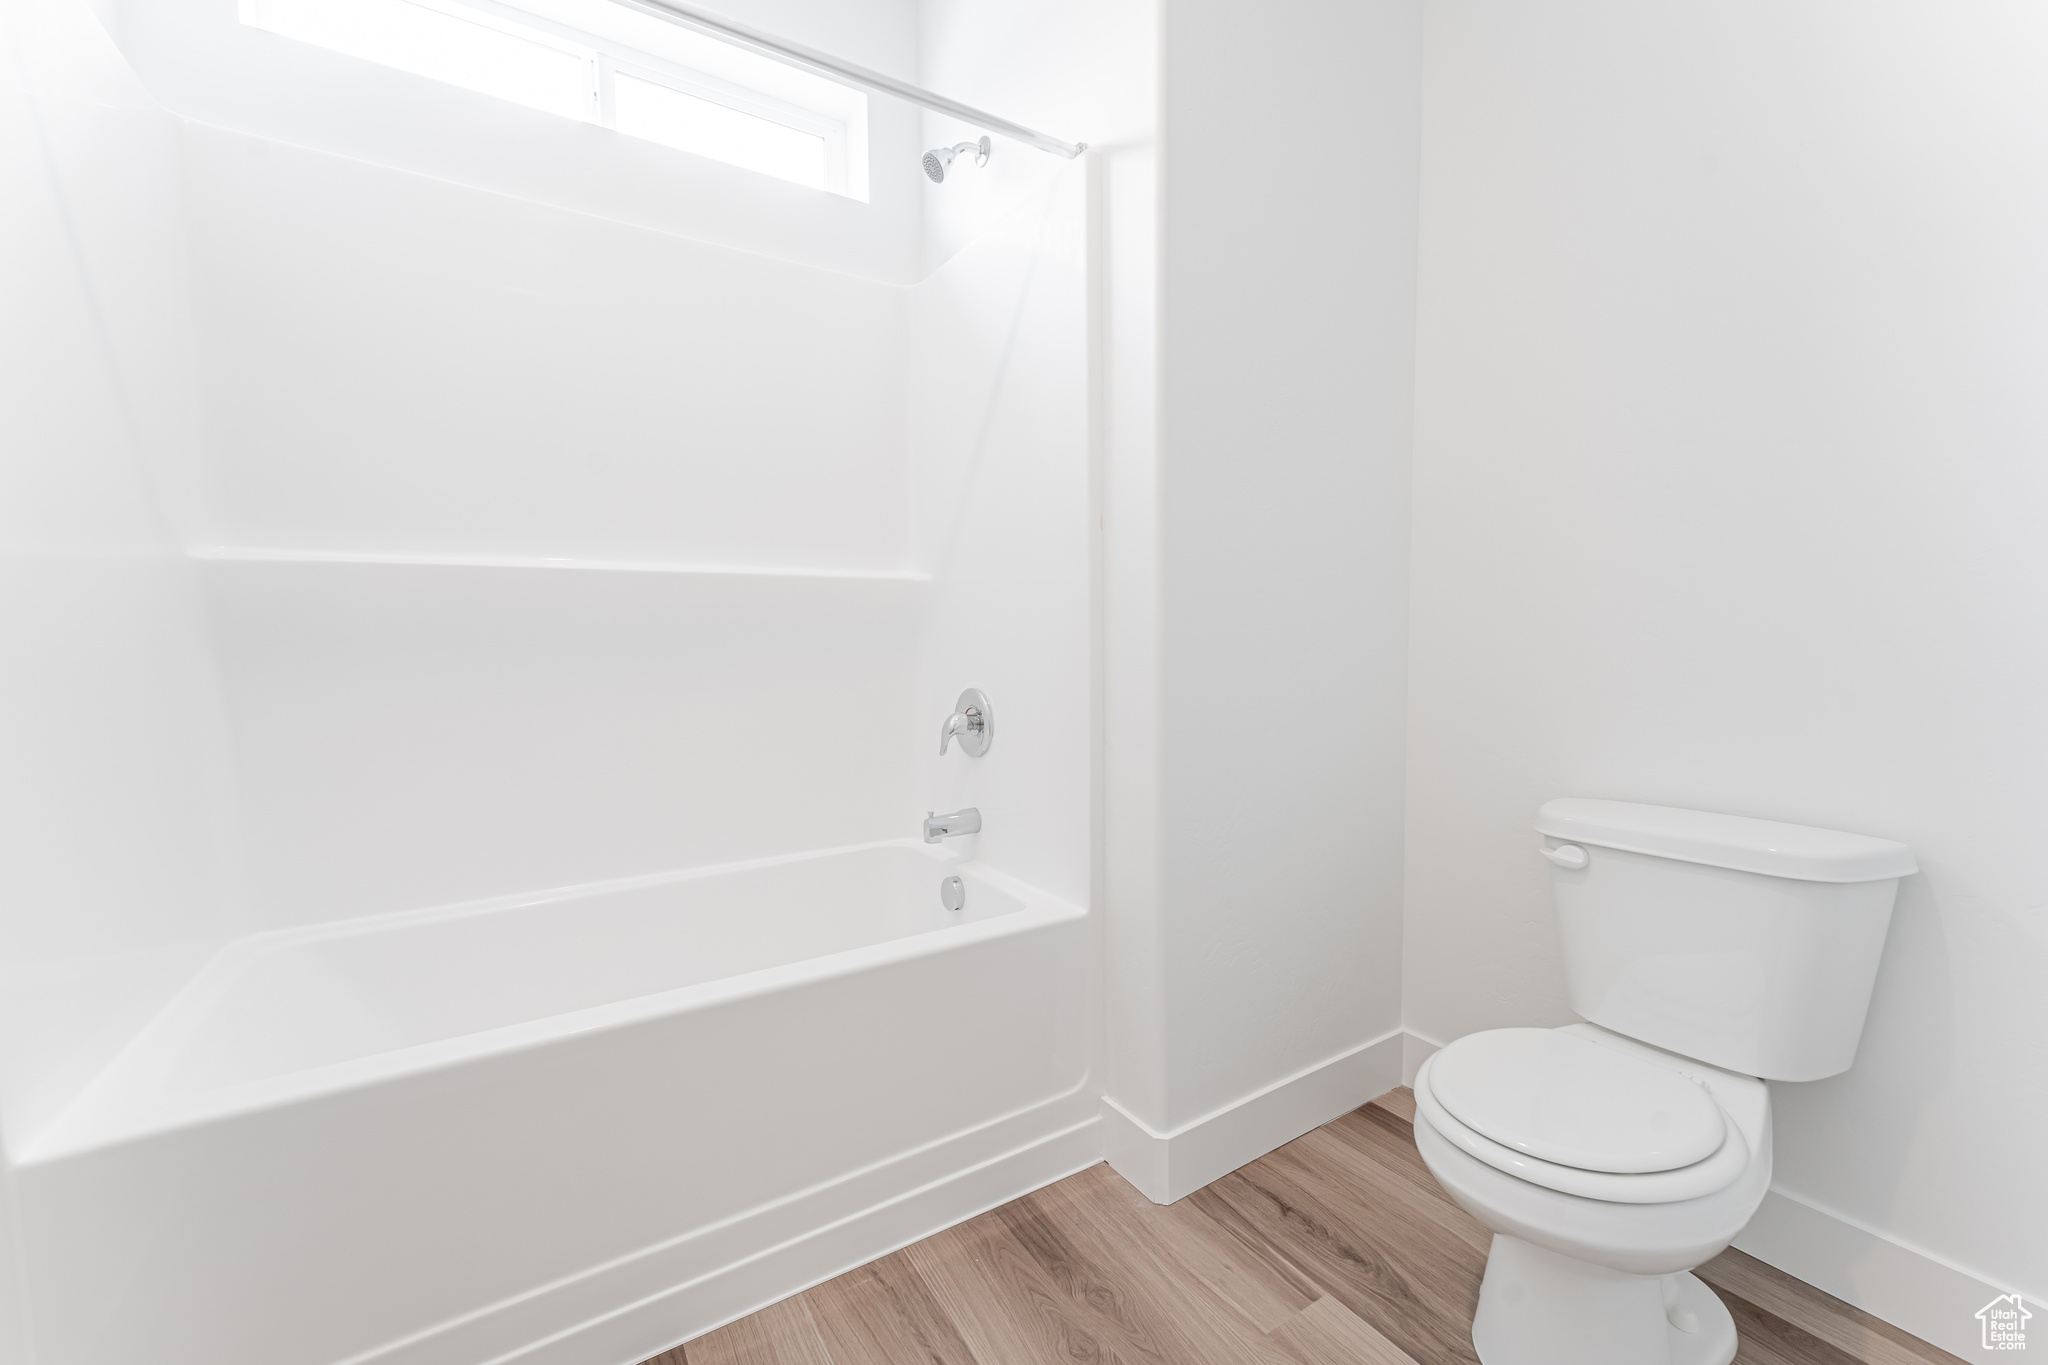 Bathroom featuring shower / bathing tub combination, toilet, and hardwood / wood-style flooring